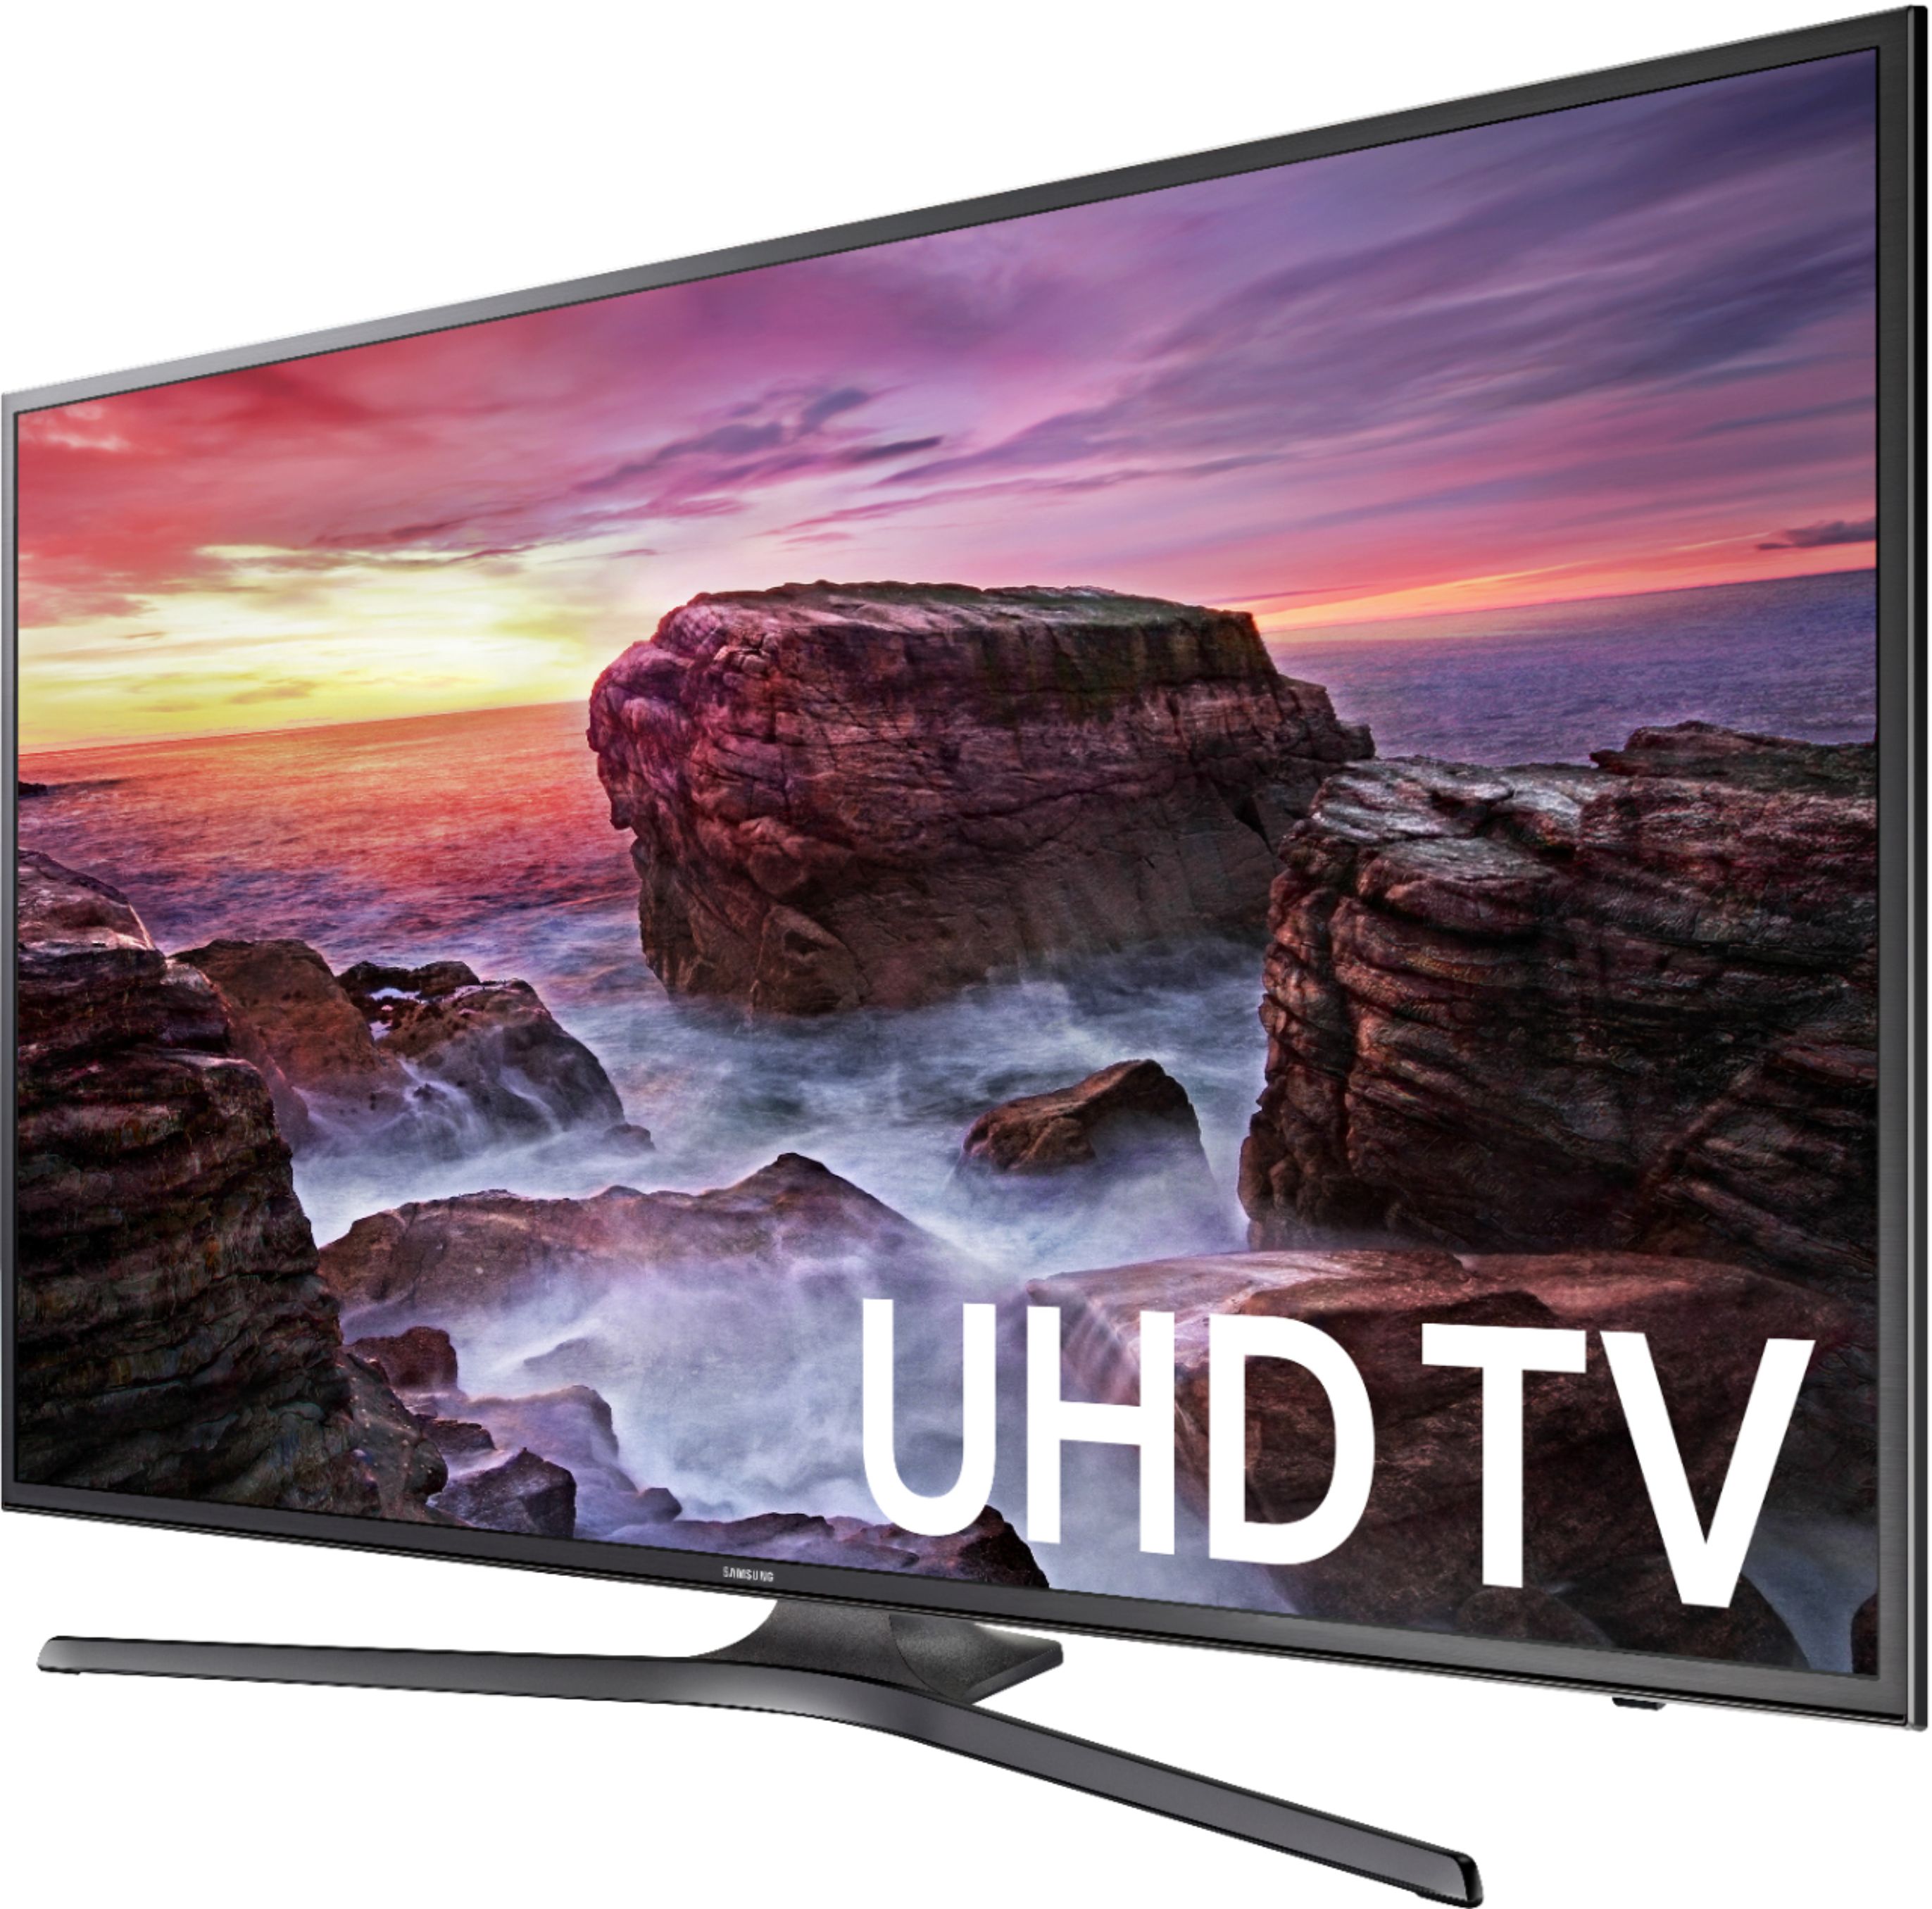 Best Buy: Samsung Class LED MU6070 Series 2160p Smart Ultra TV with HDR UN50MU6070FXZA